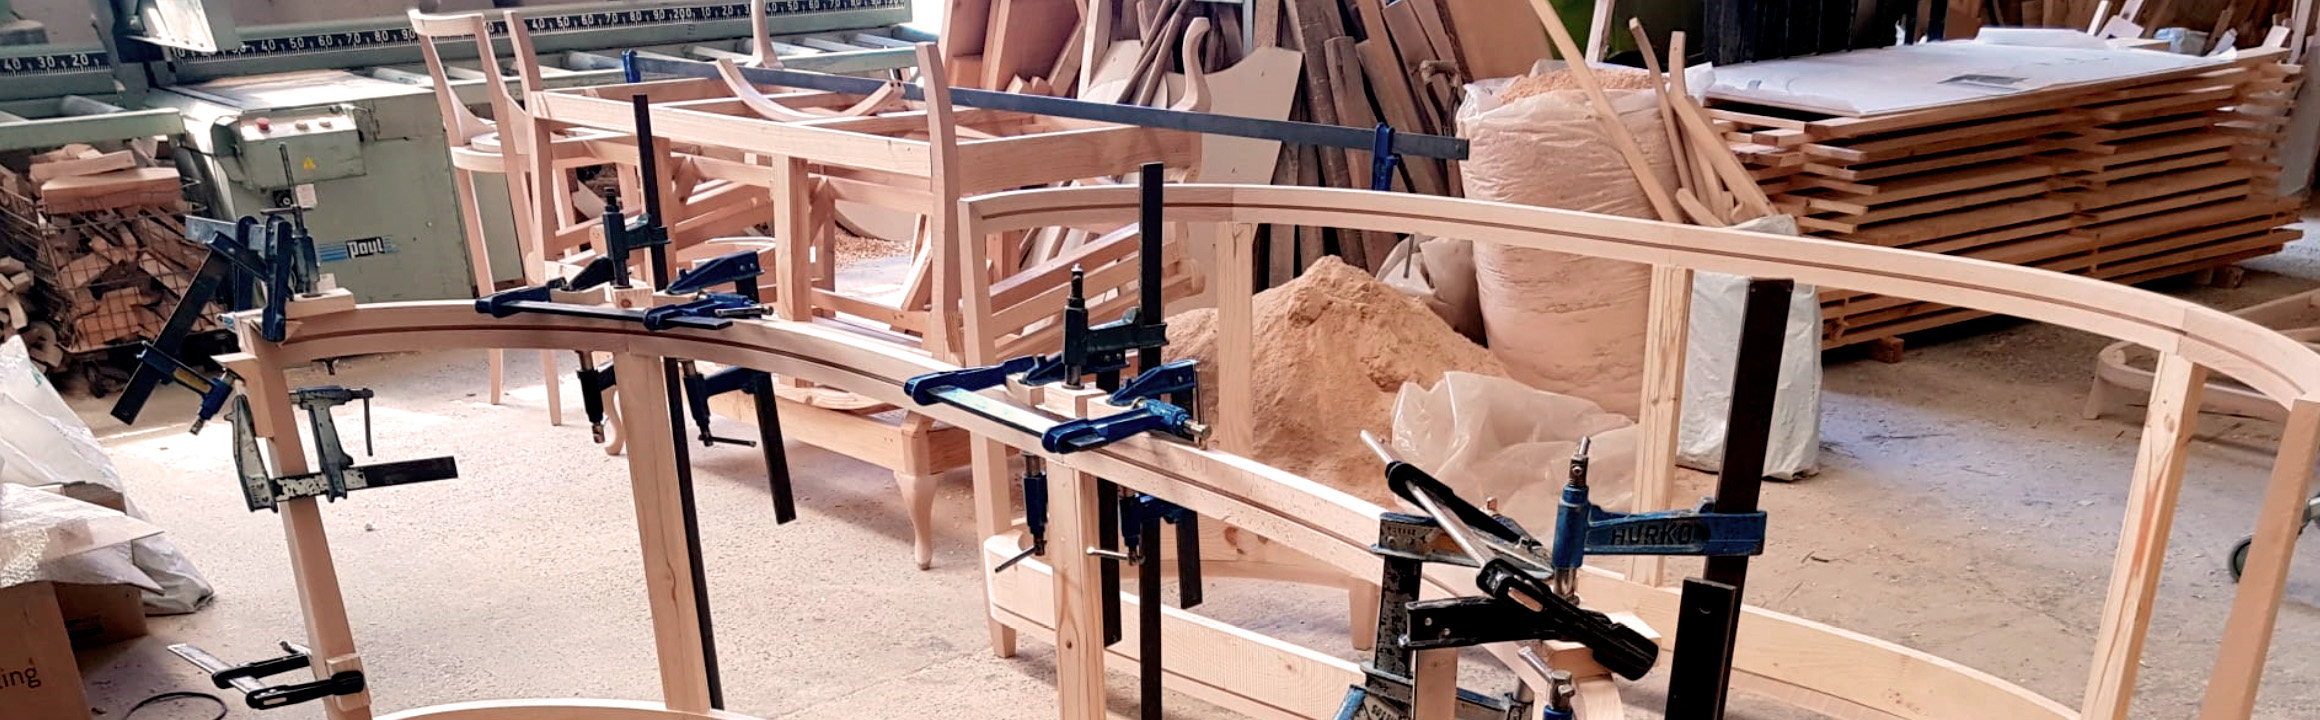 taller mecanizado madera zaragoza